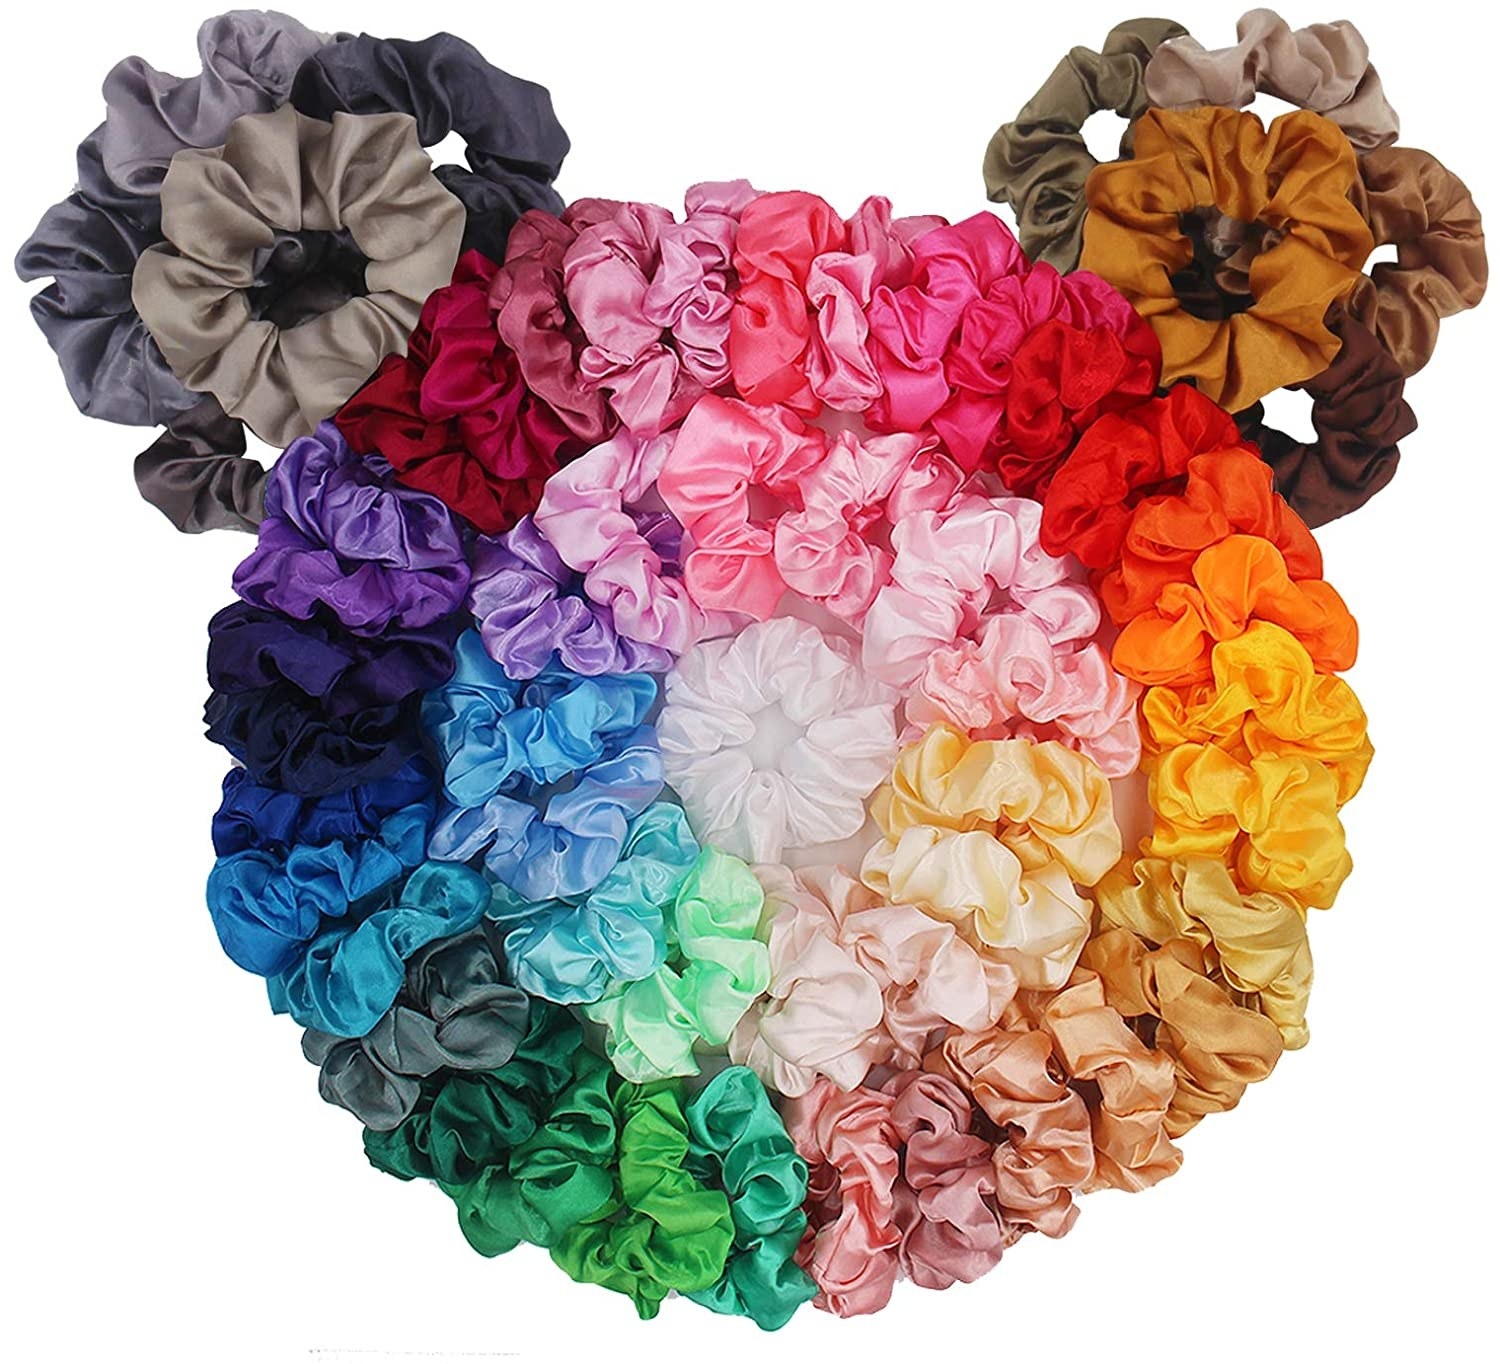 The scrunchies organized into a circular pile